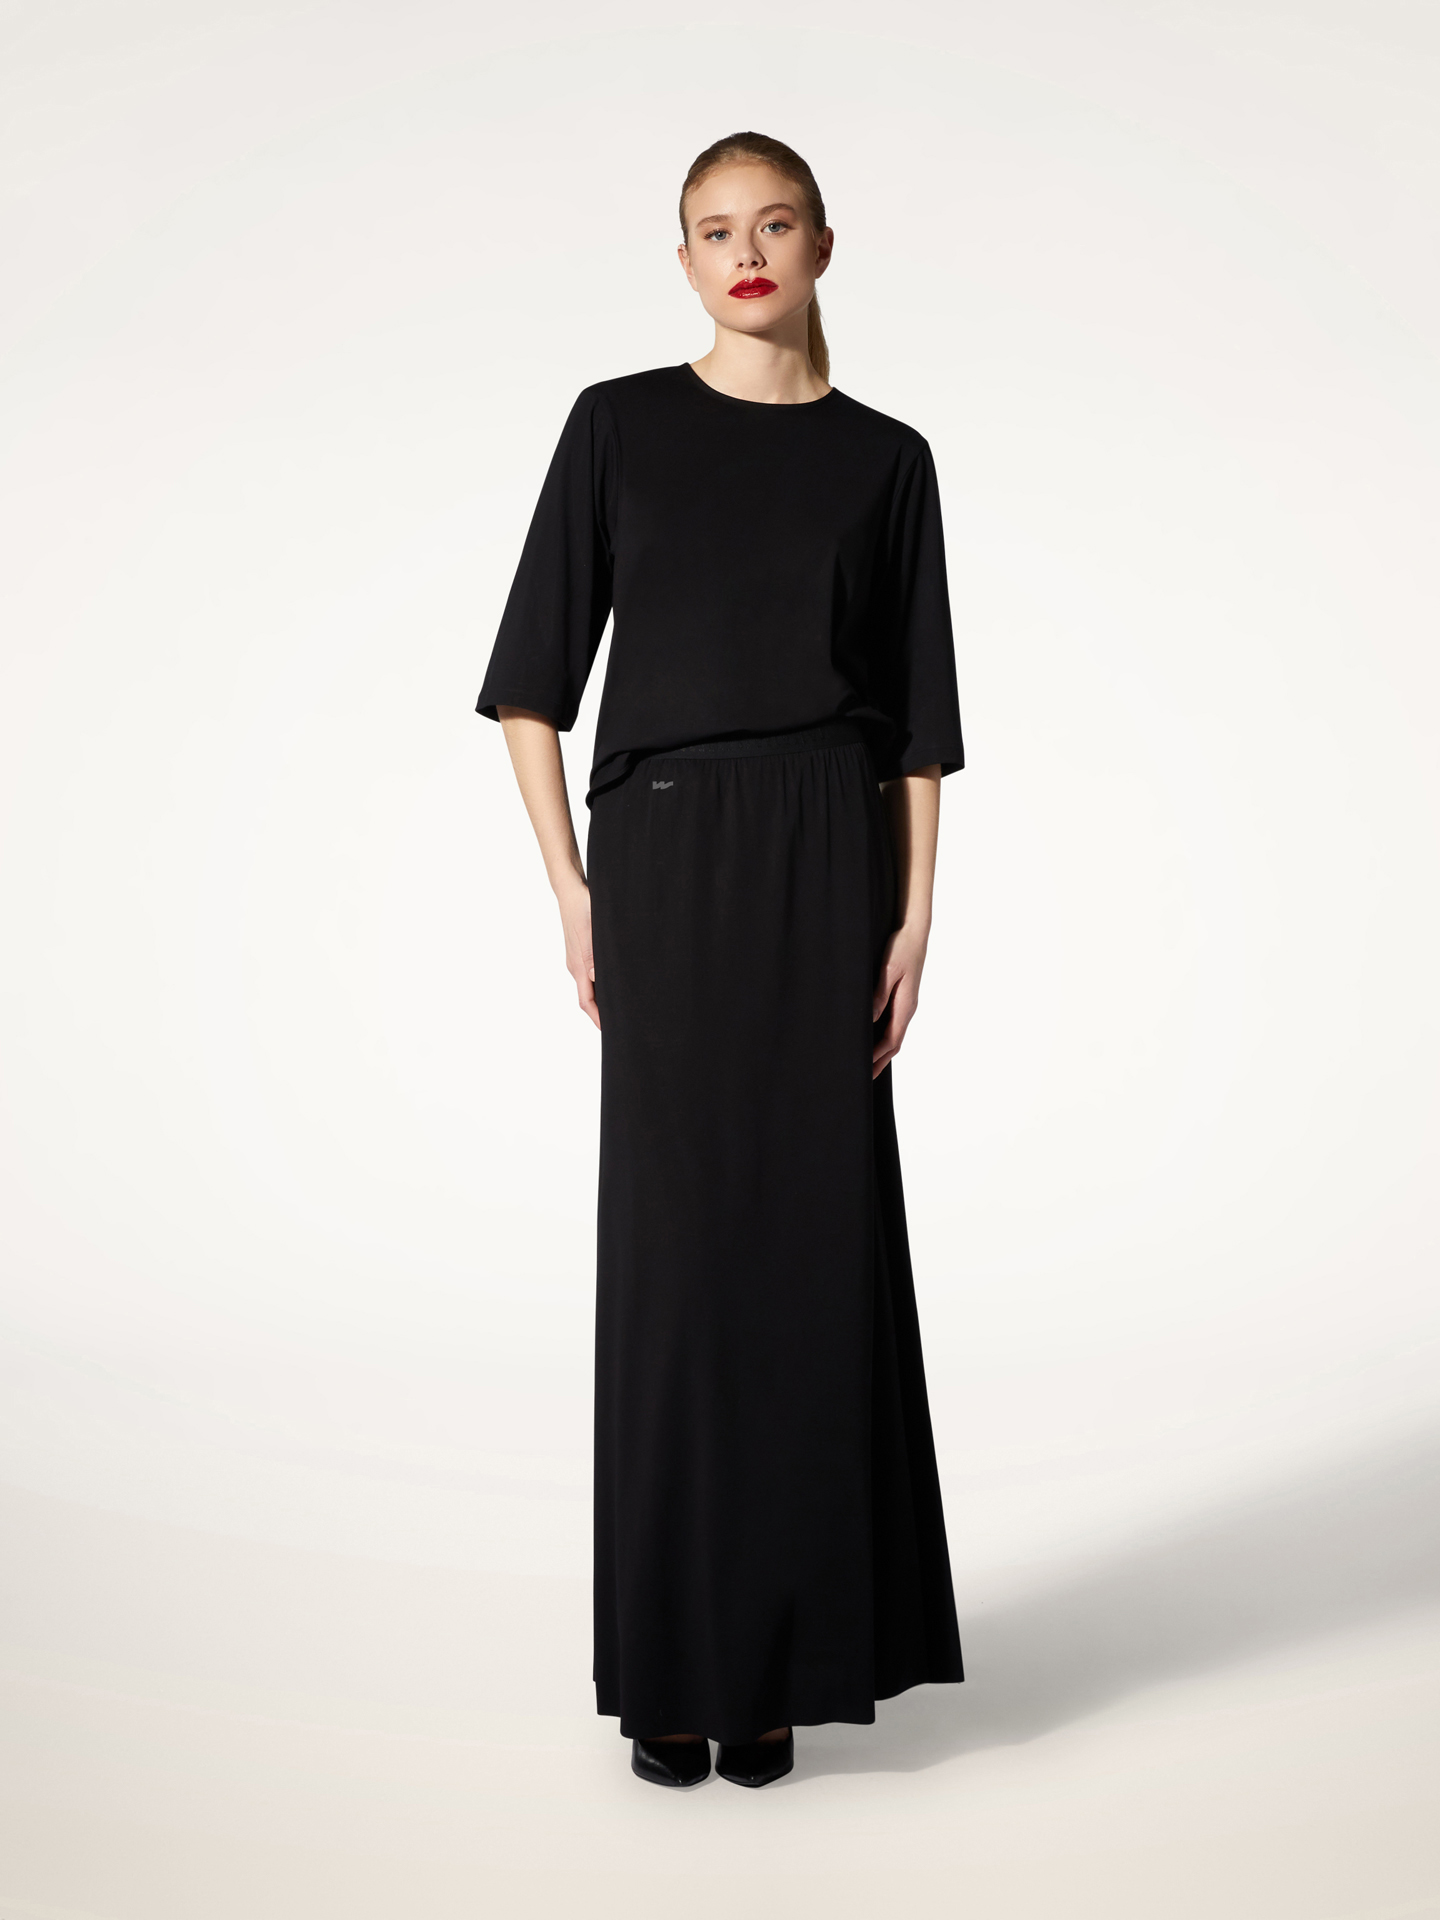 Wolford - Leisure Top Short Sleeves, Frau, black, Größe: S günstig online kaufen